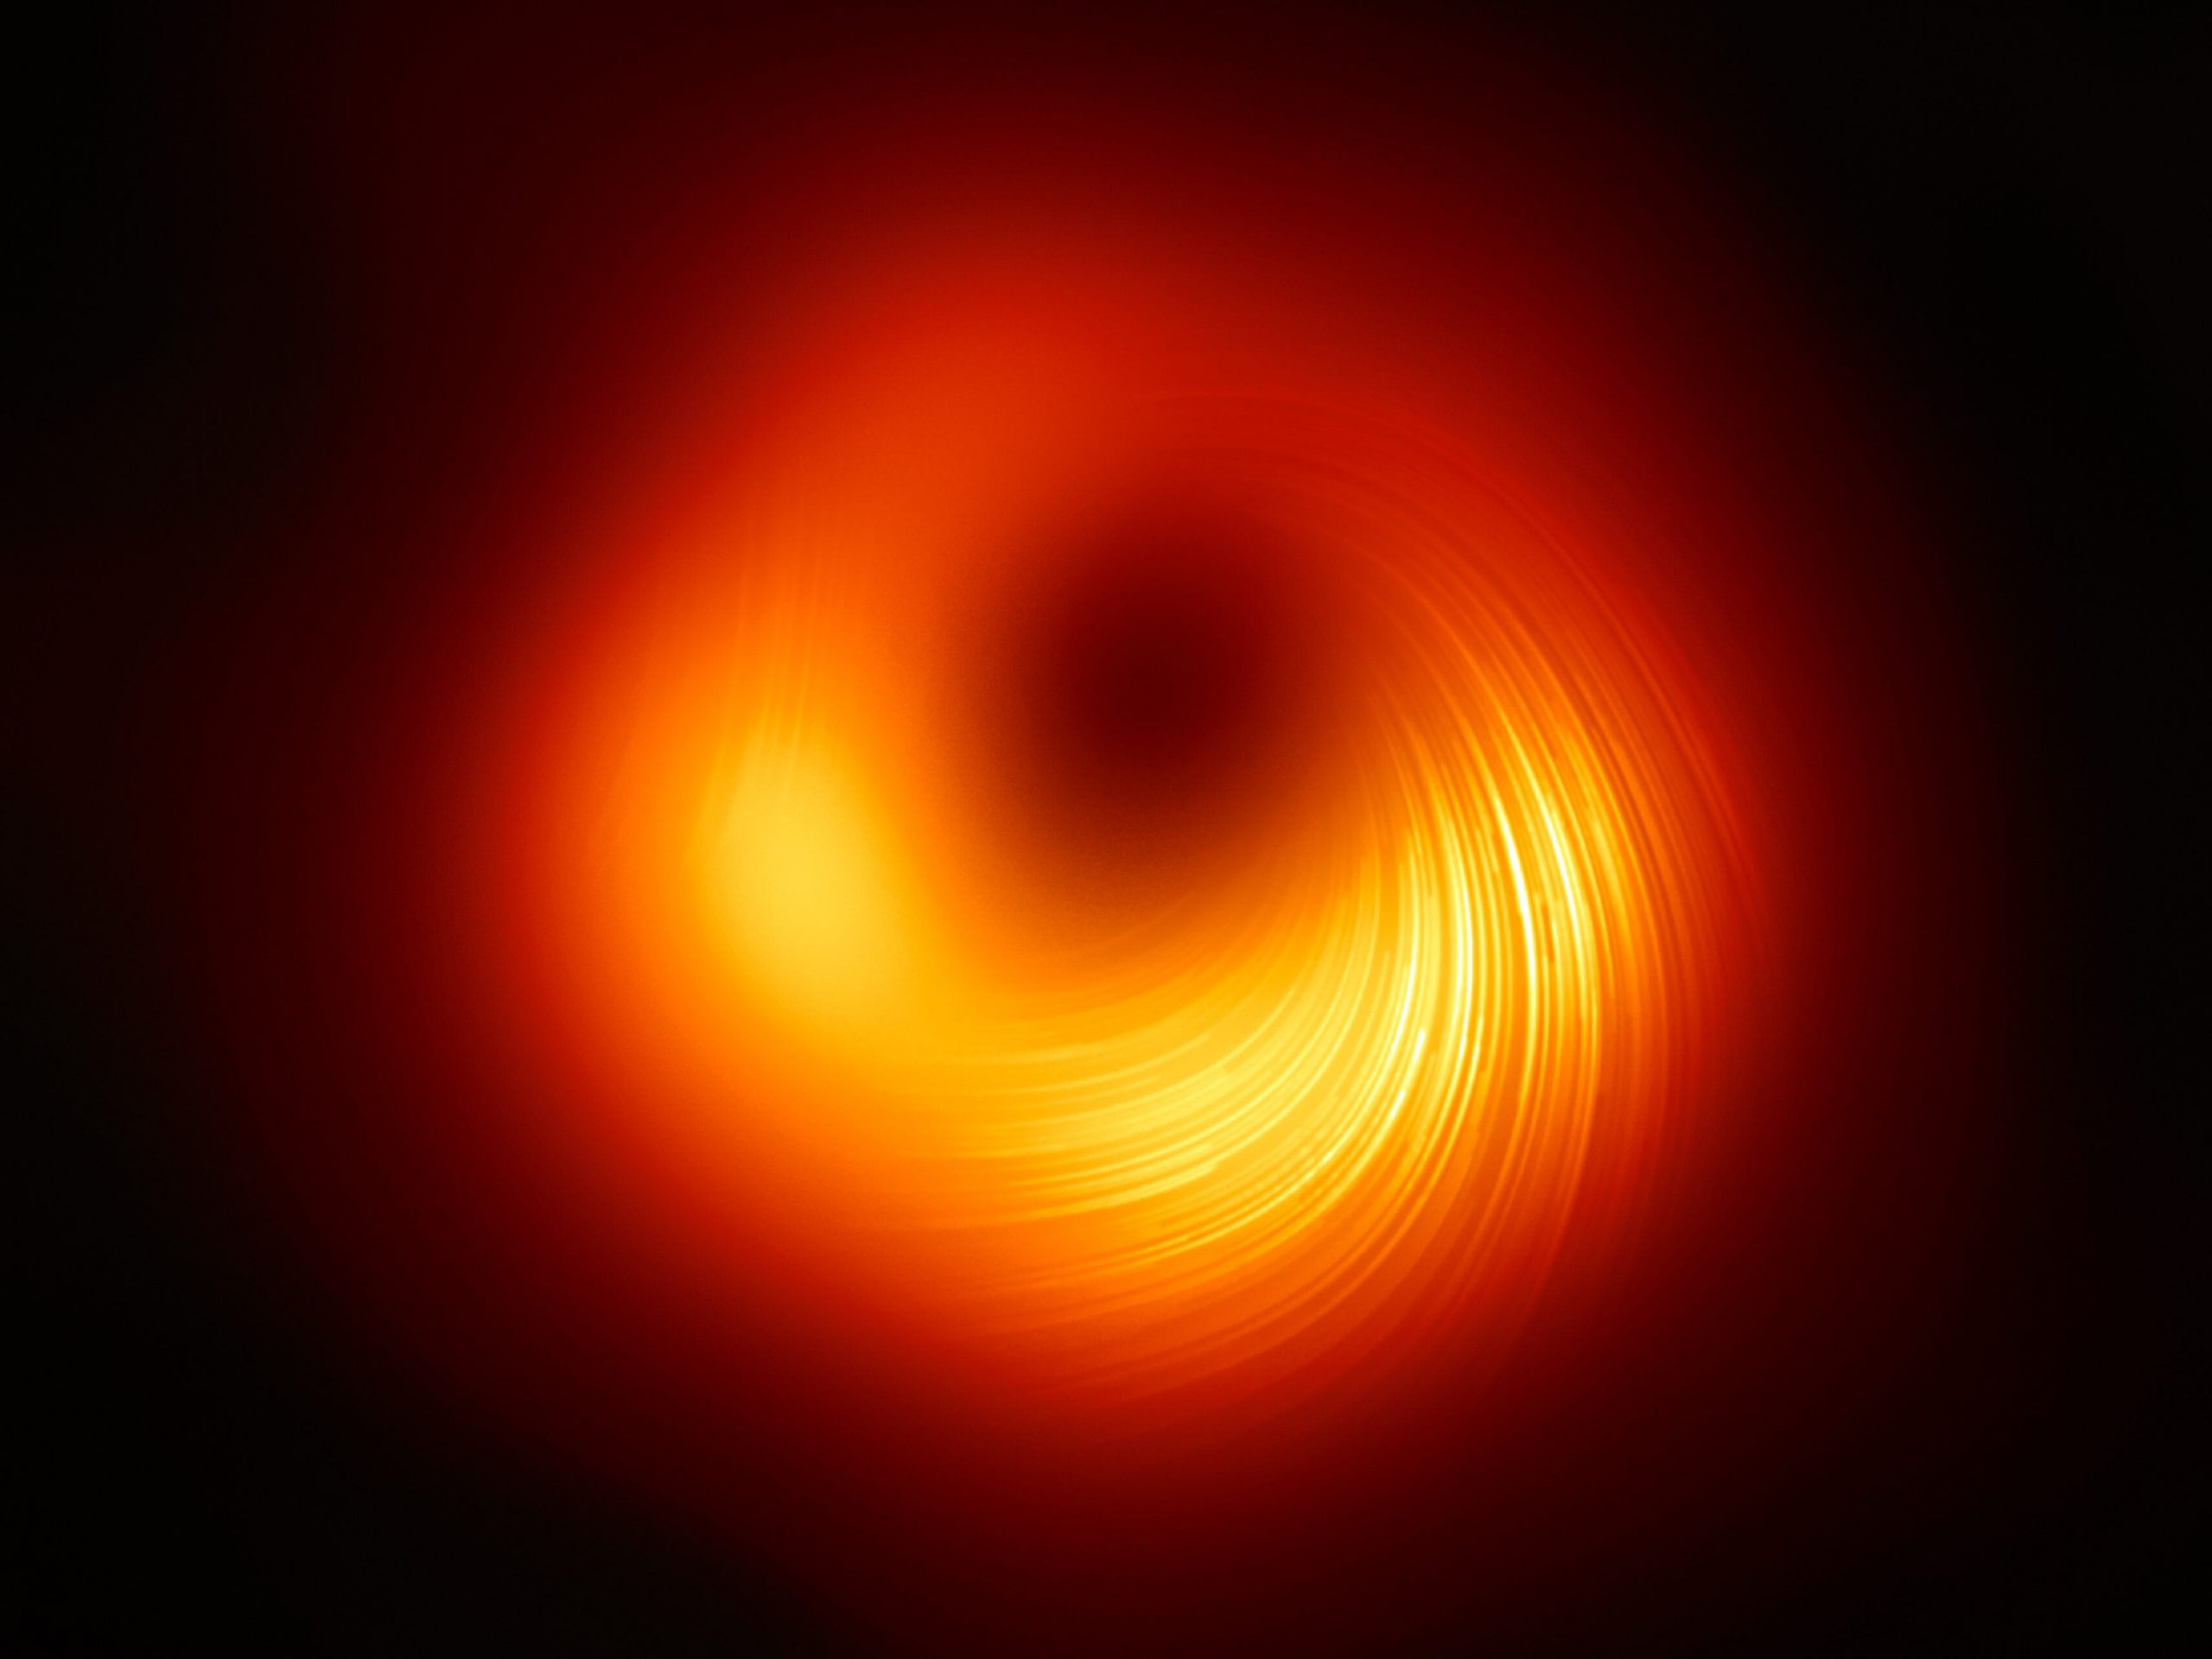 EHT black hole magnetic fields